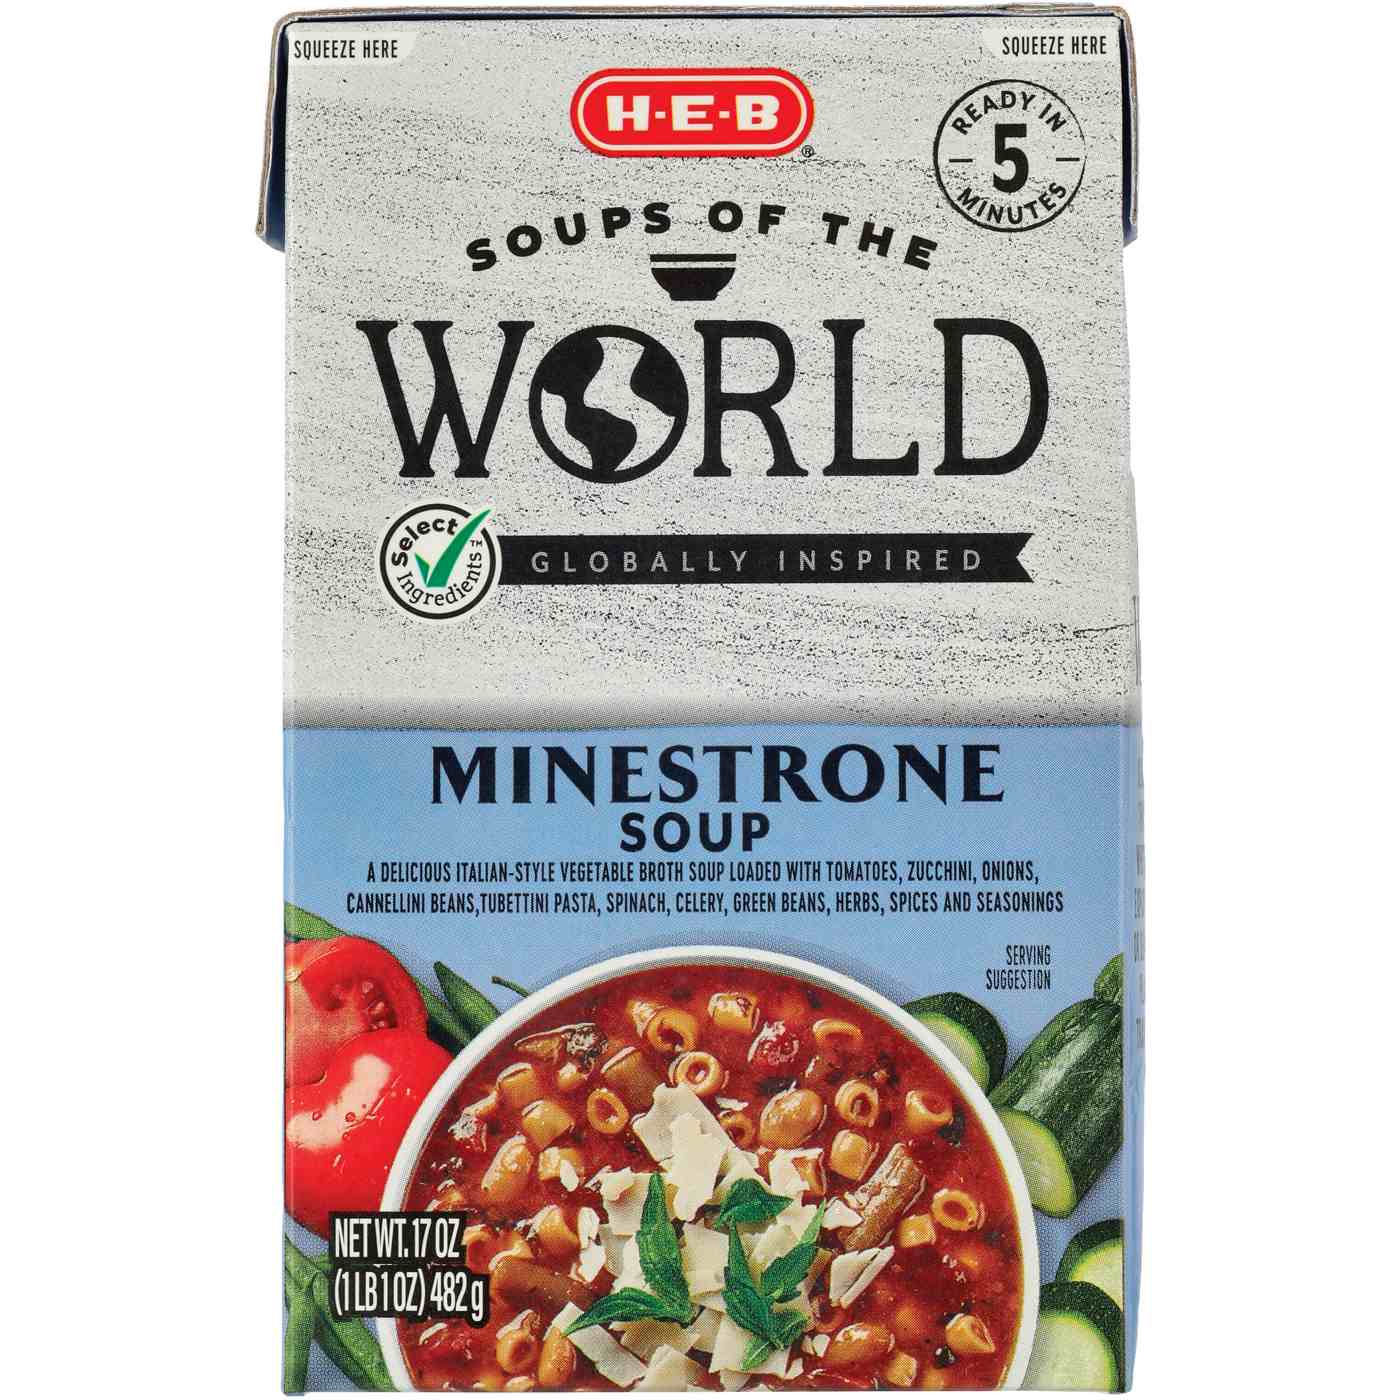 H-E-B Minestrone Soup; image 1 of 2